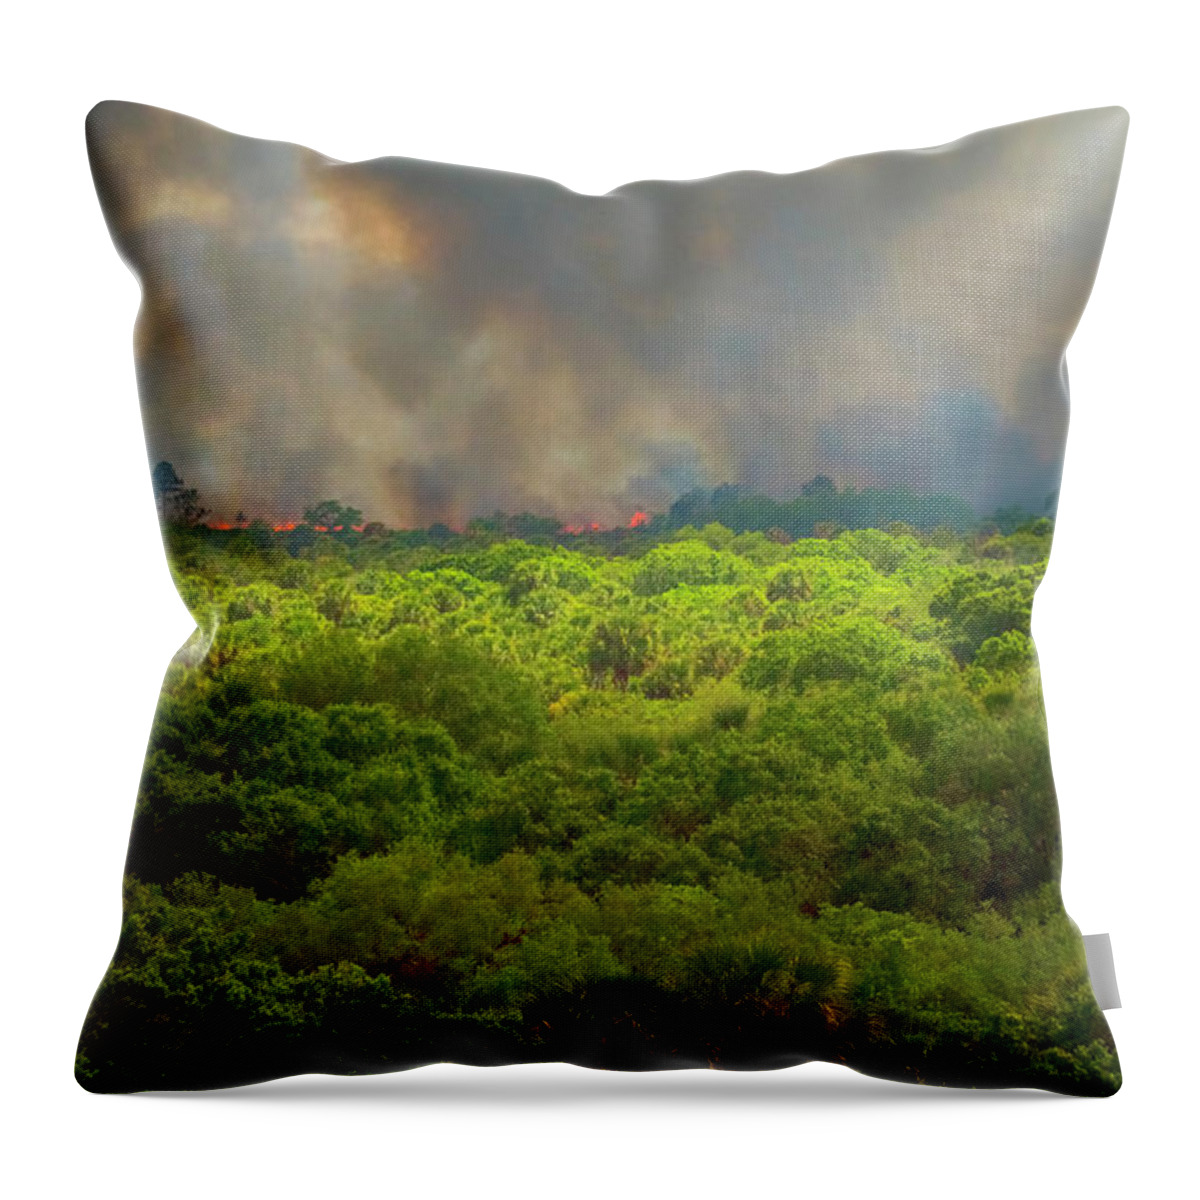 North Port Florida Throw Pillow featuring the photograph Myakka River Burn by Tom Singleton